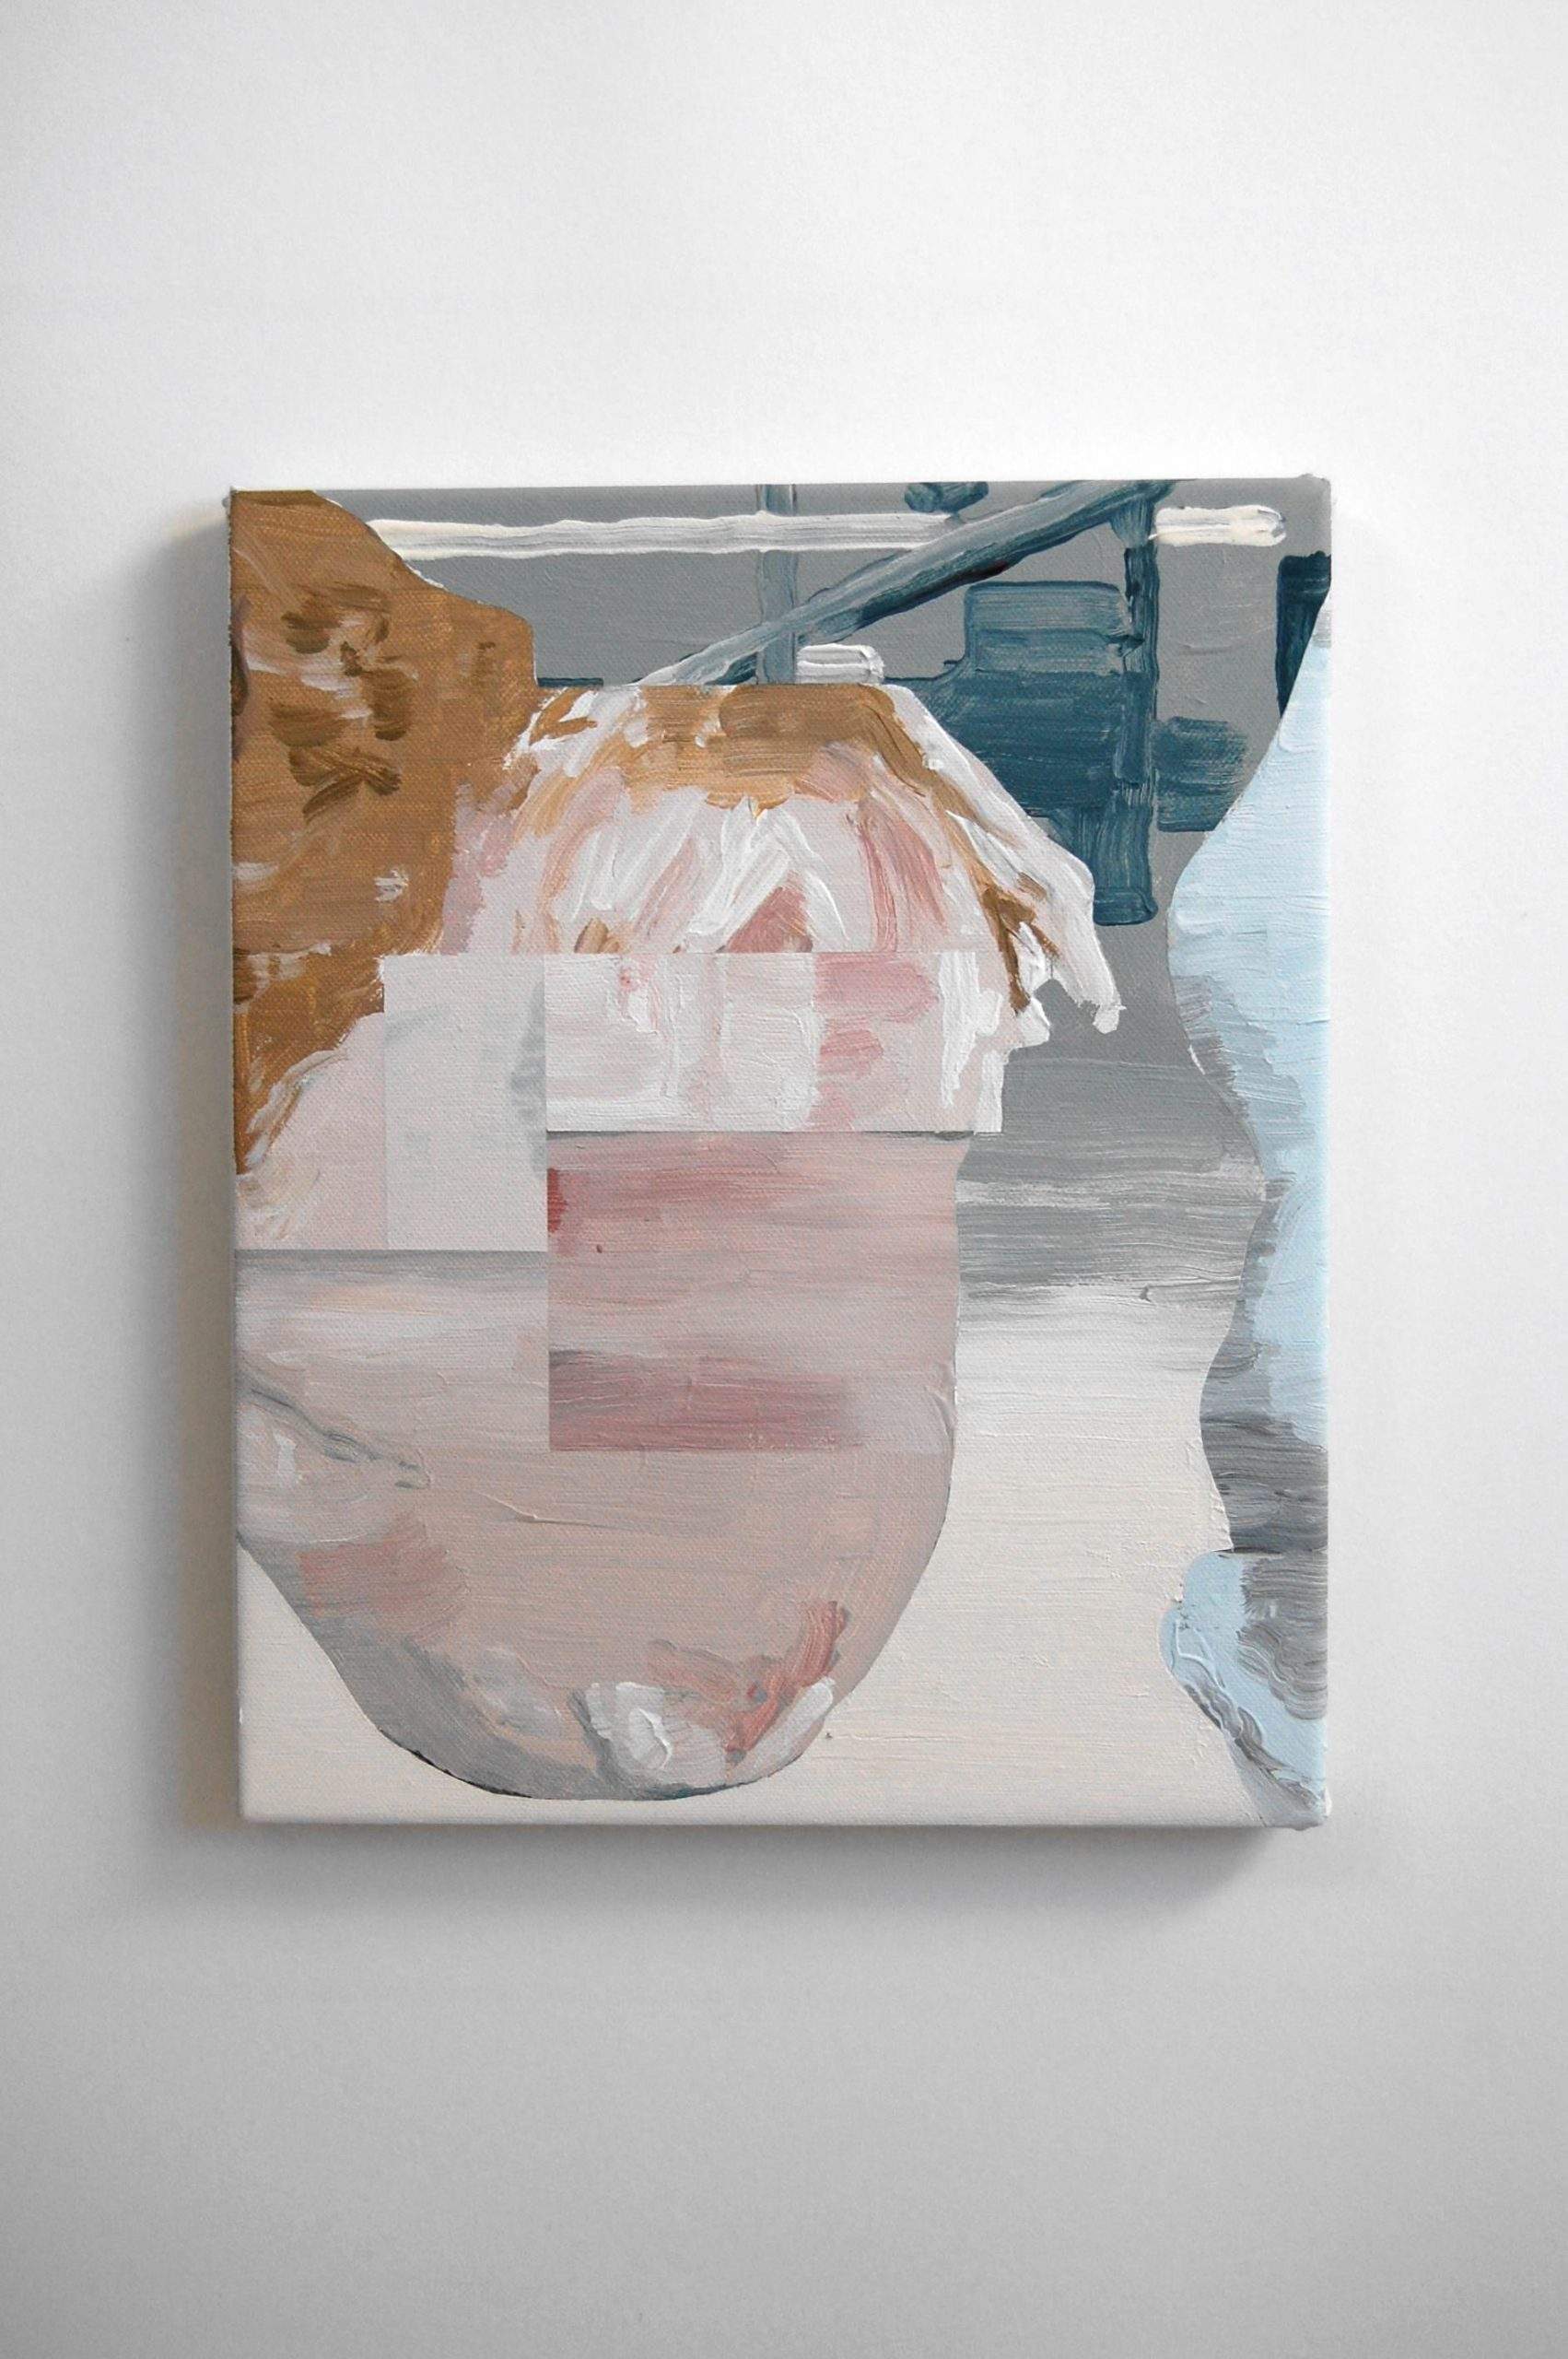 'PM', 27 x 33 cm, acrylics on canvas, 2019